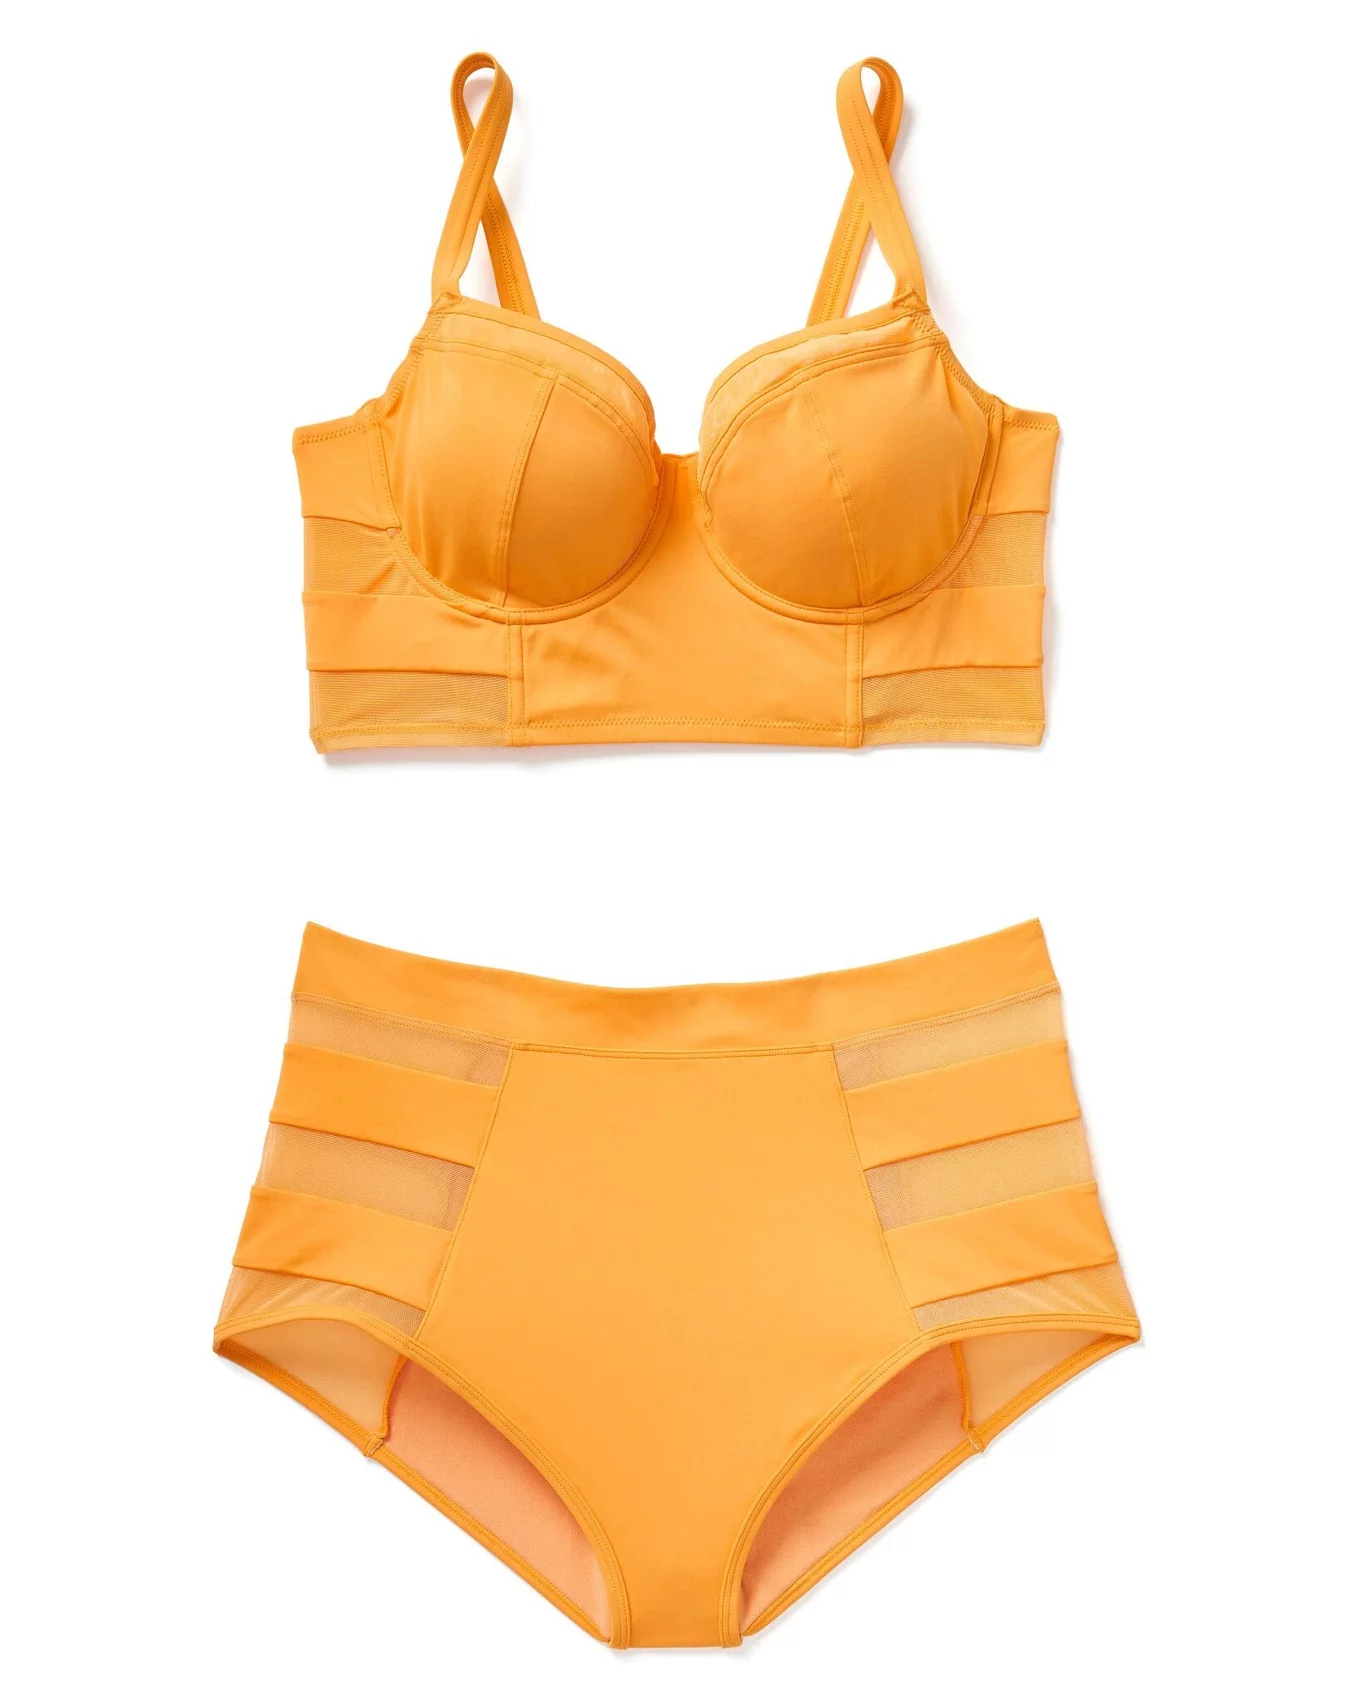 Daeny Medium Orange Plus Contour Balconette Bikini, 38DDD-42D